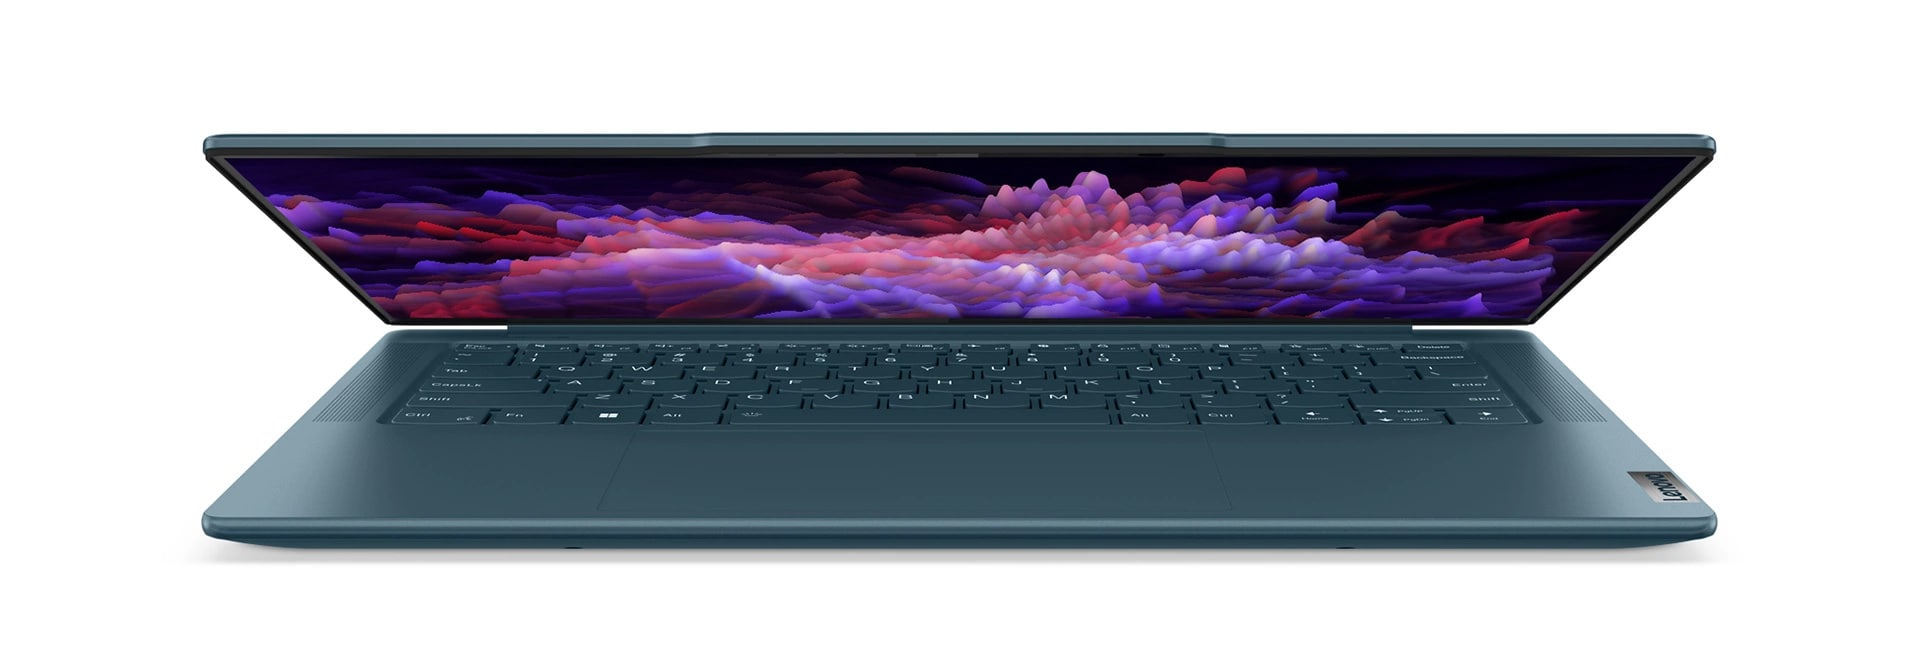 Half-open Lenovo Yoga laptop frontal shot